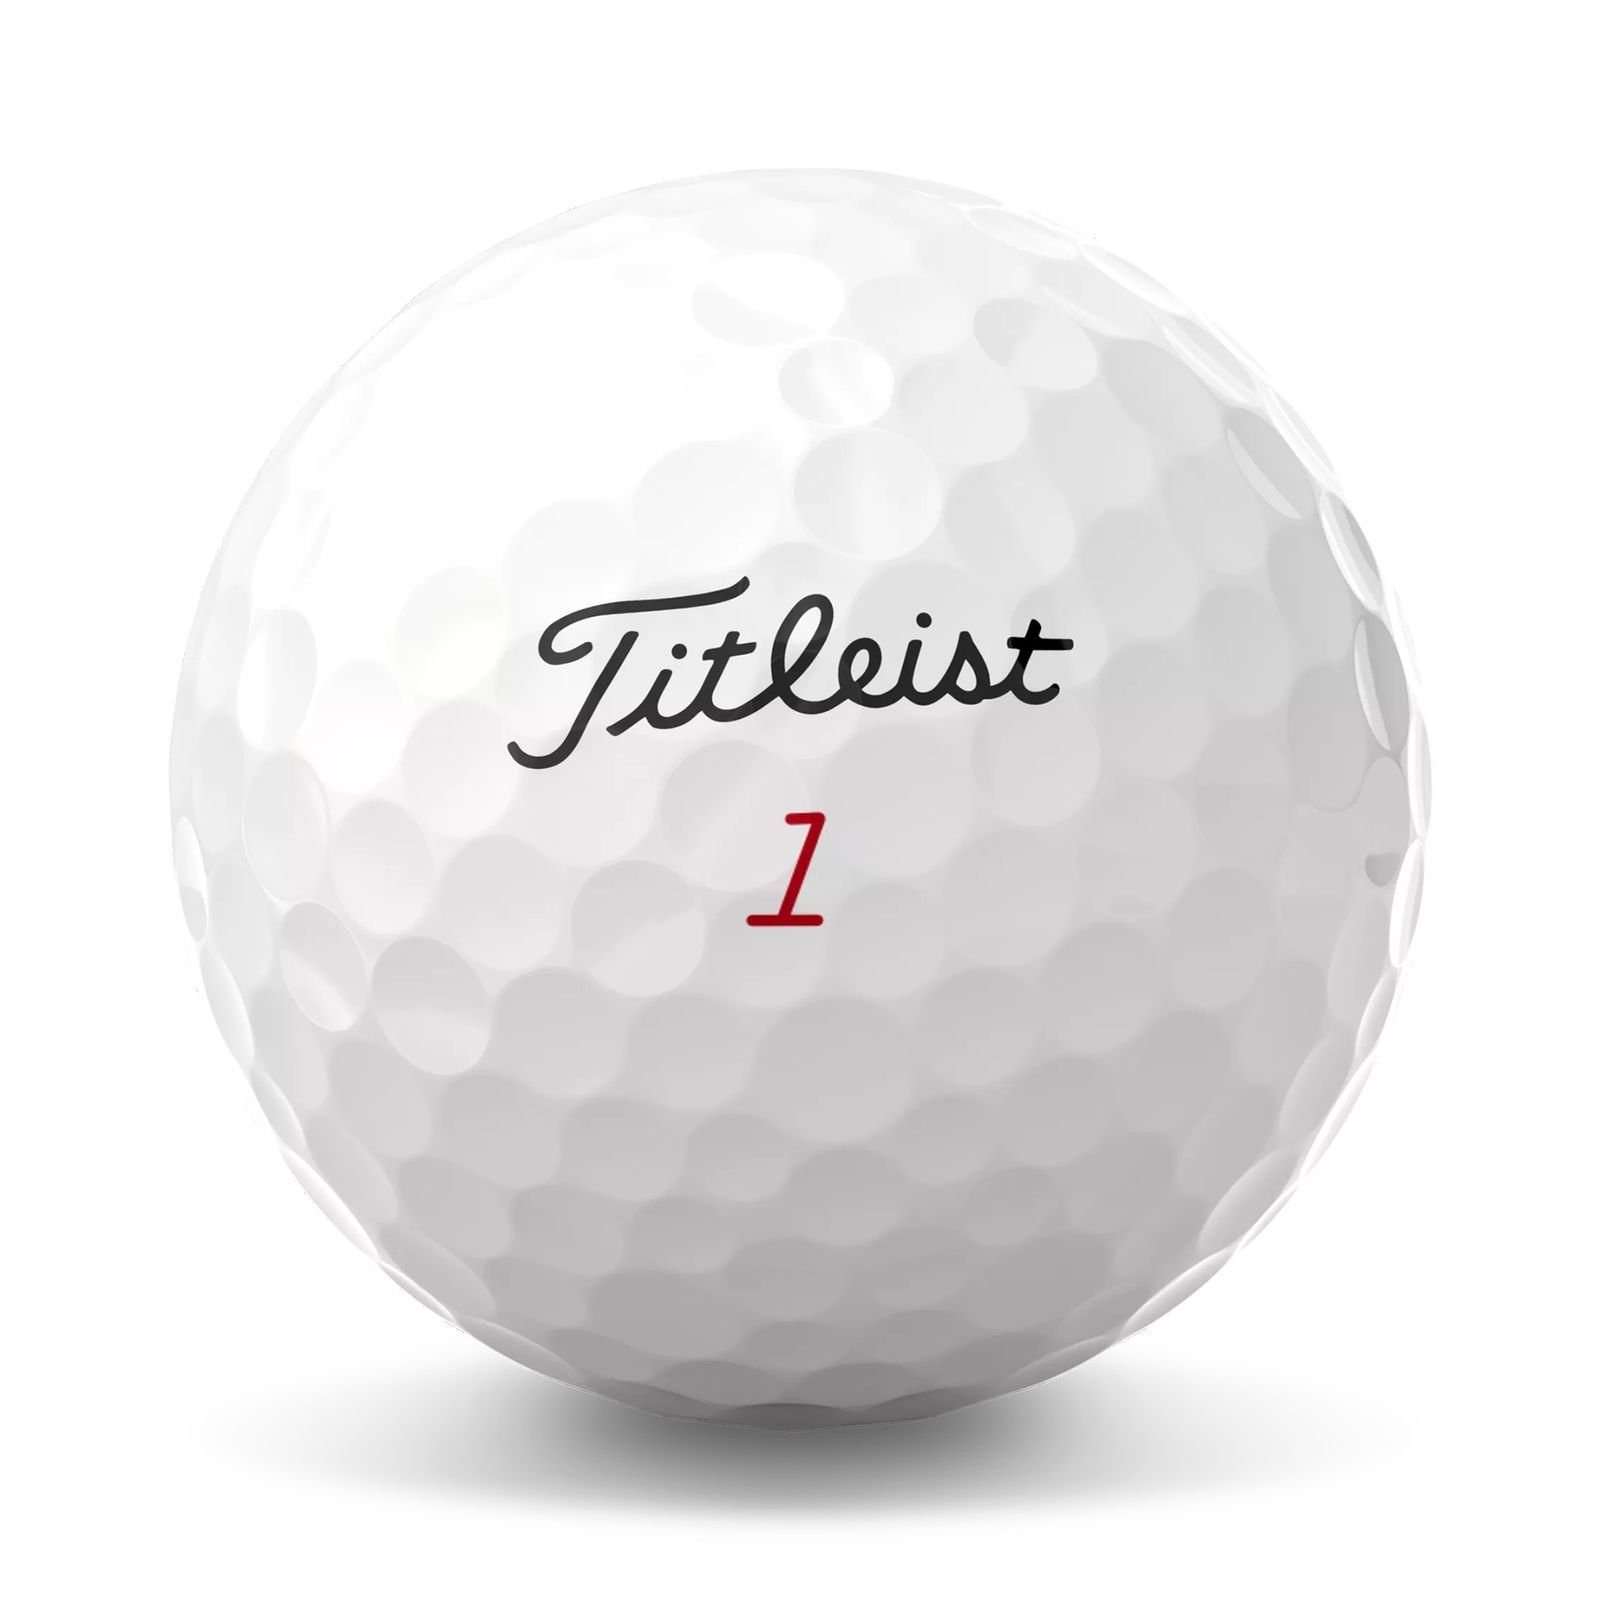 Golfball UND Pro V1x Version SPIN 12 5-6-7-8 LEISTUNG Neue I Titleist KONTROLLE,MAXIMALE 2023 Titleist Golfbälle Stück,